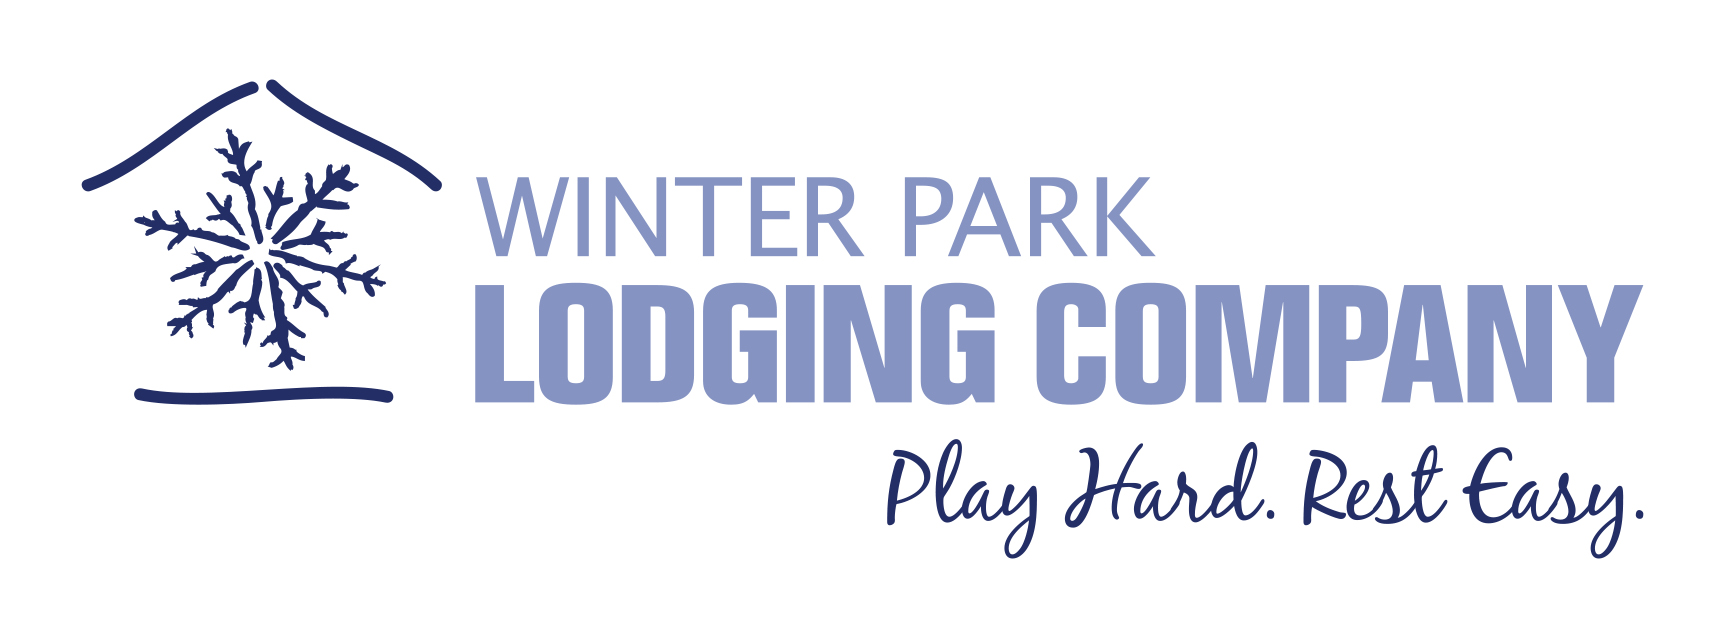 Winter Park Lodging Company